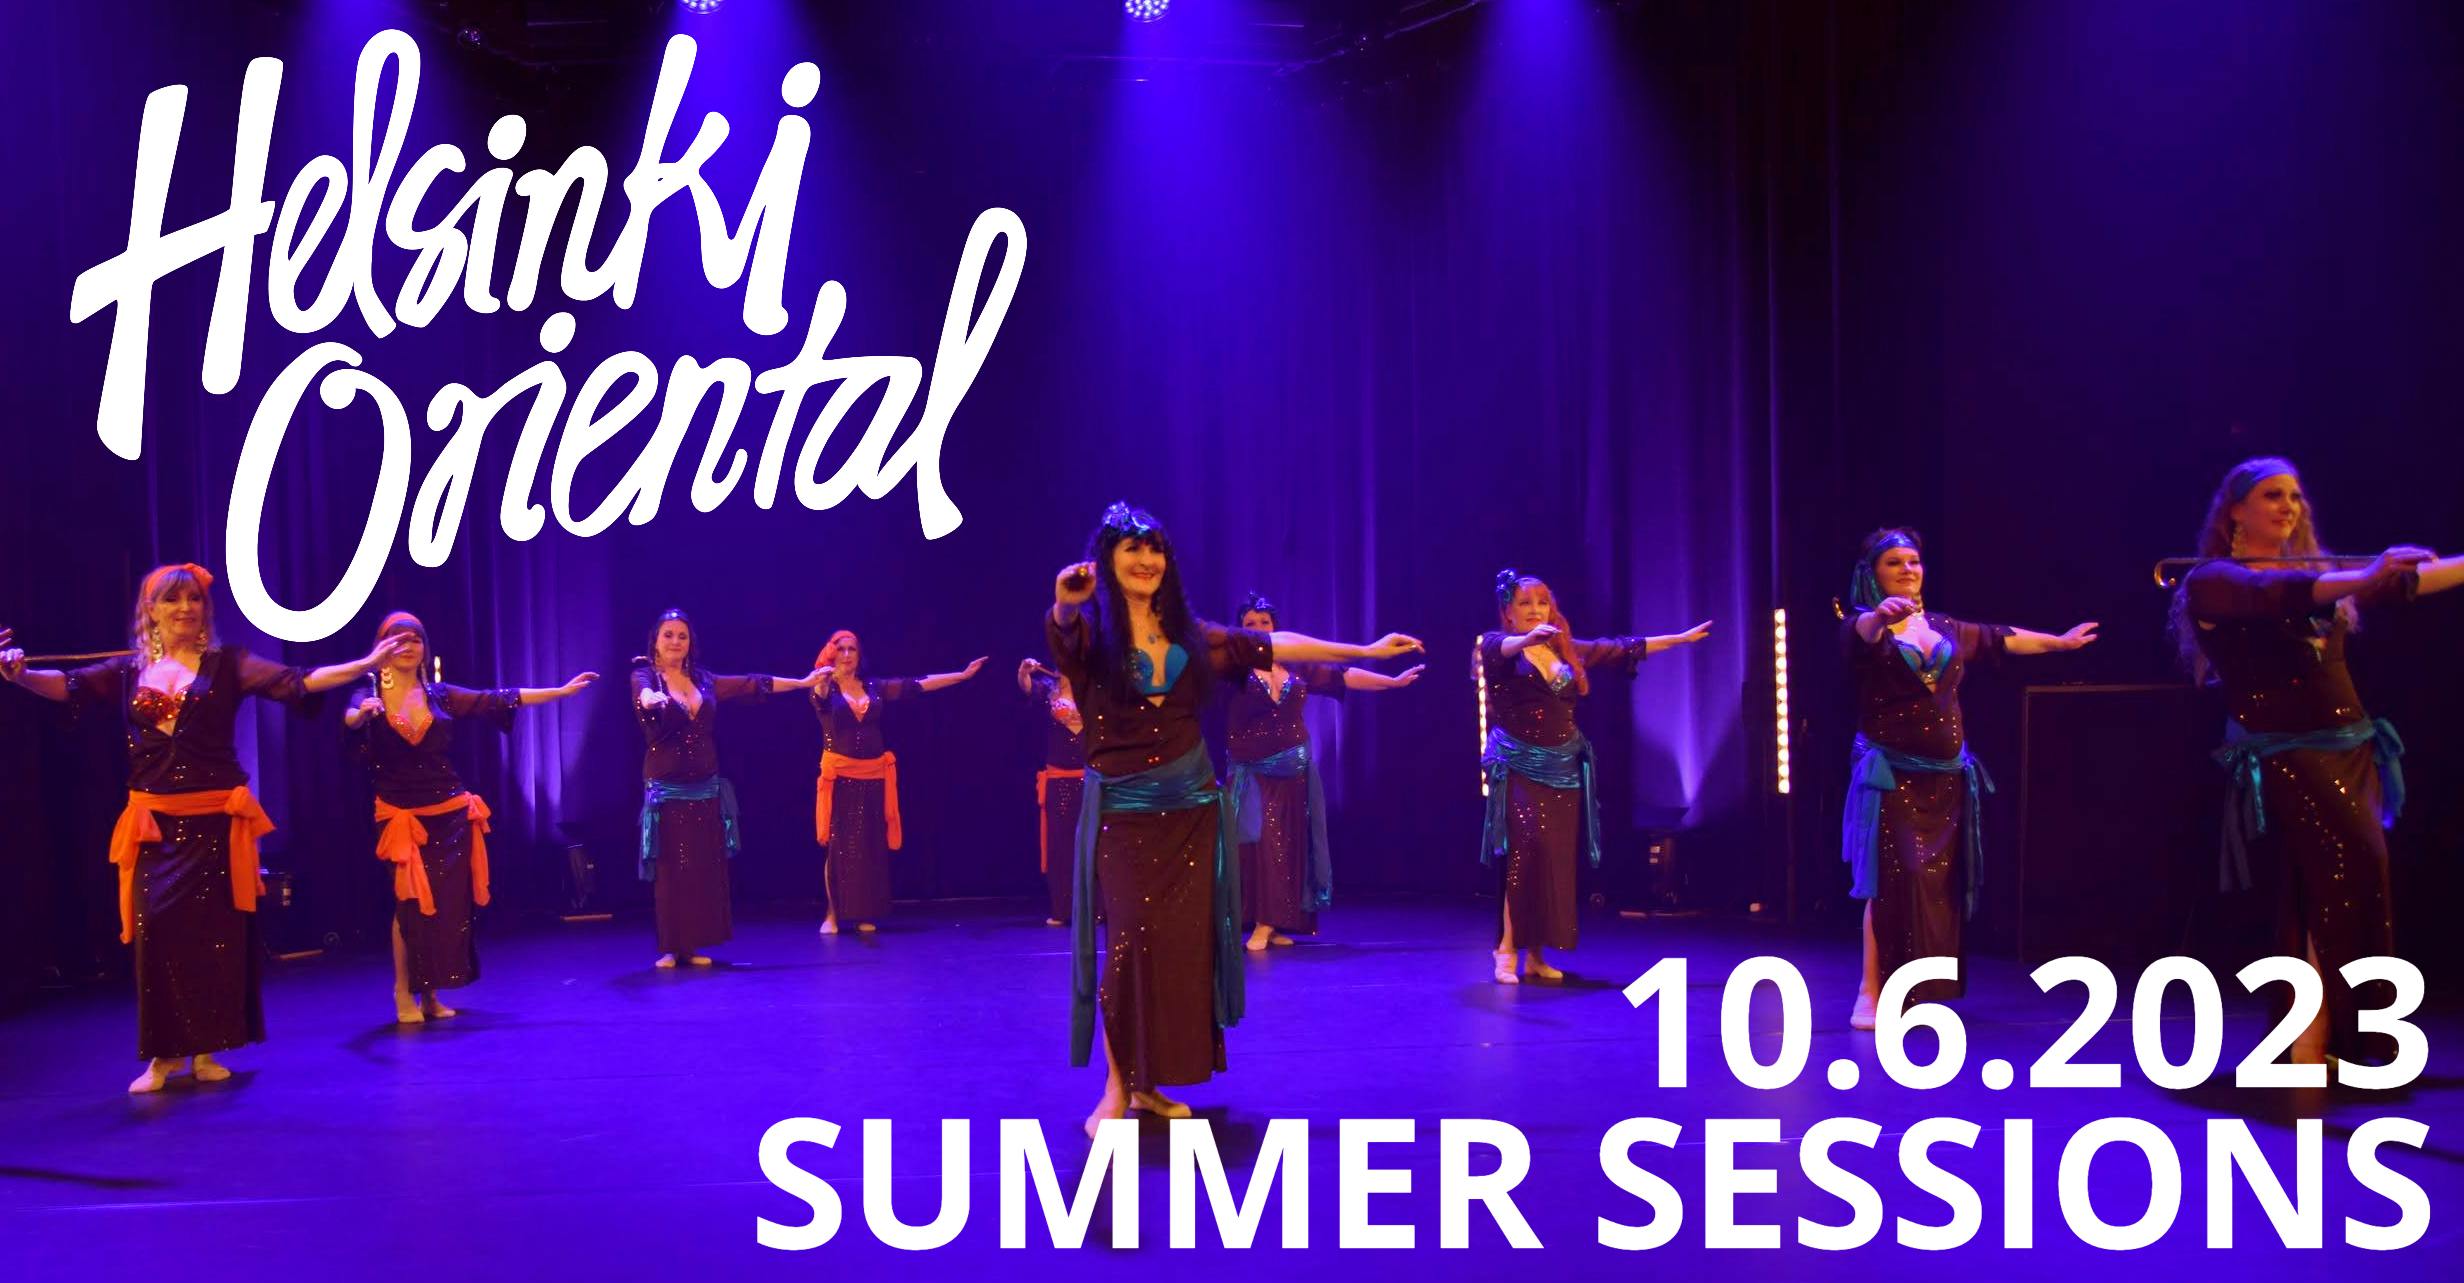 Helsinki Oriental Summer Sessions 10.6.2023